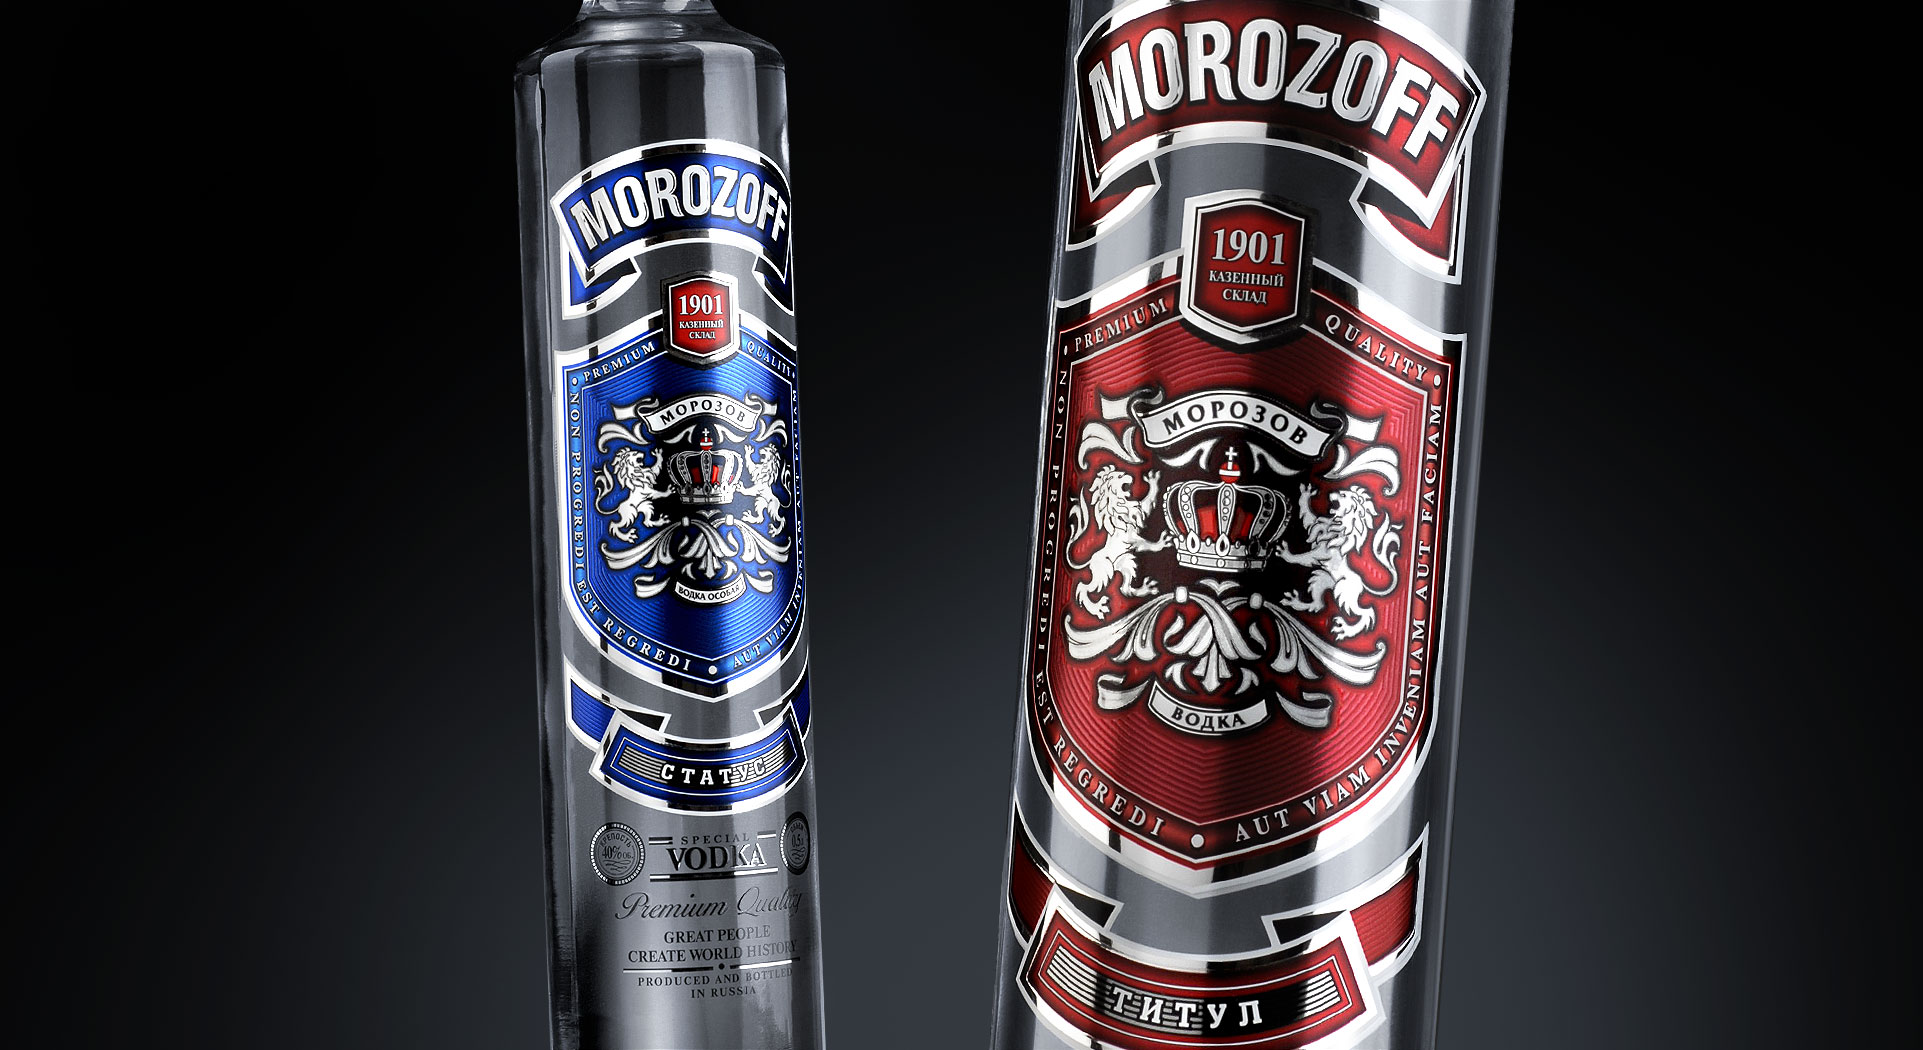 Morozoff vodka label design